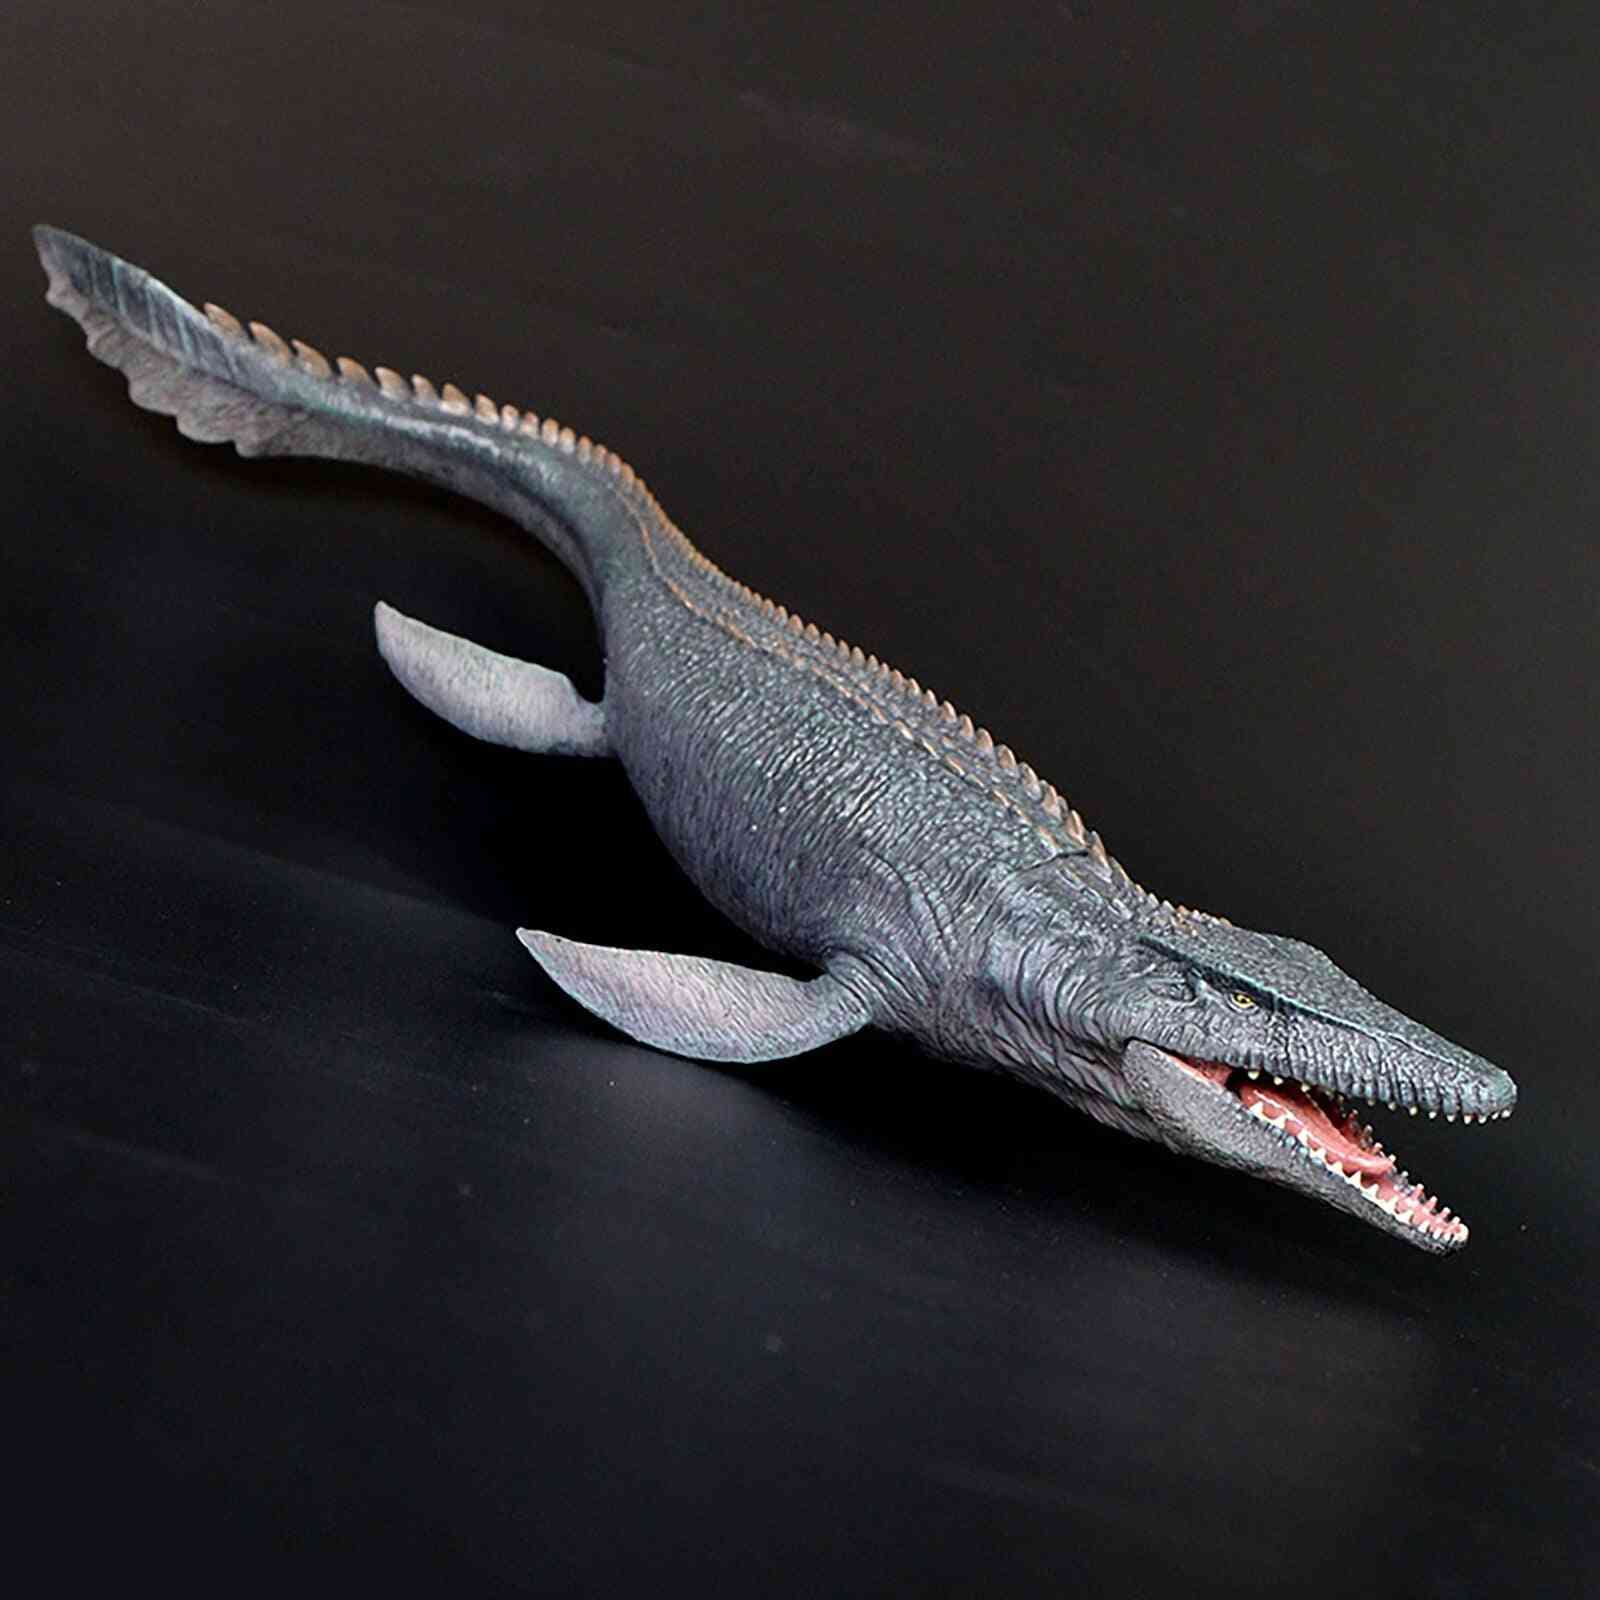 Realistic Large Dinosaur Model